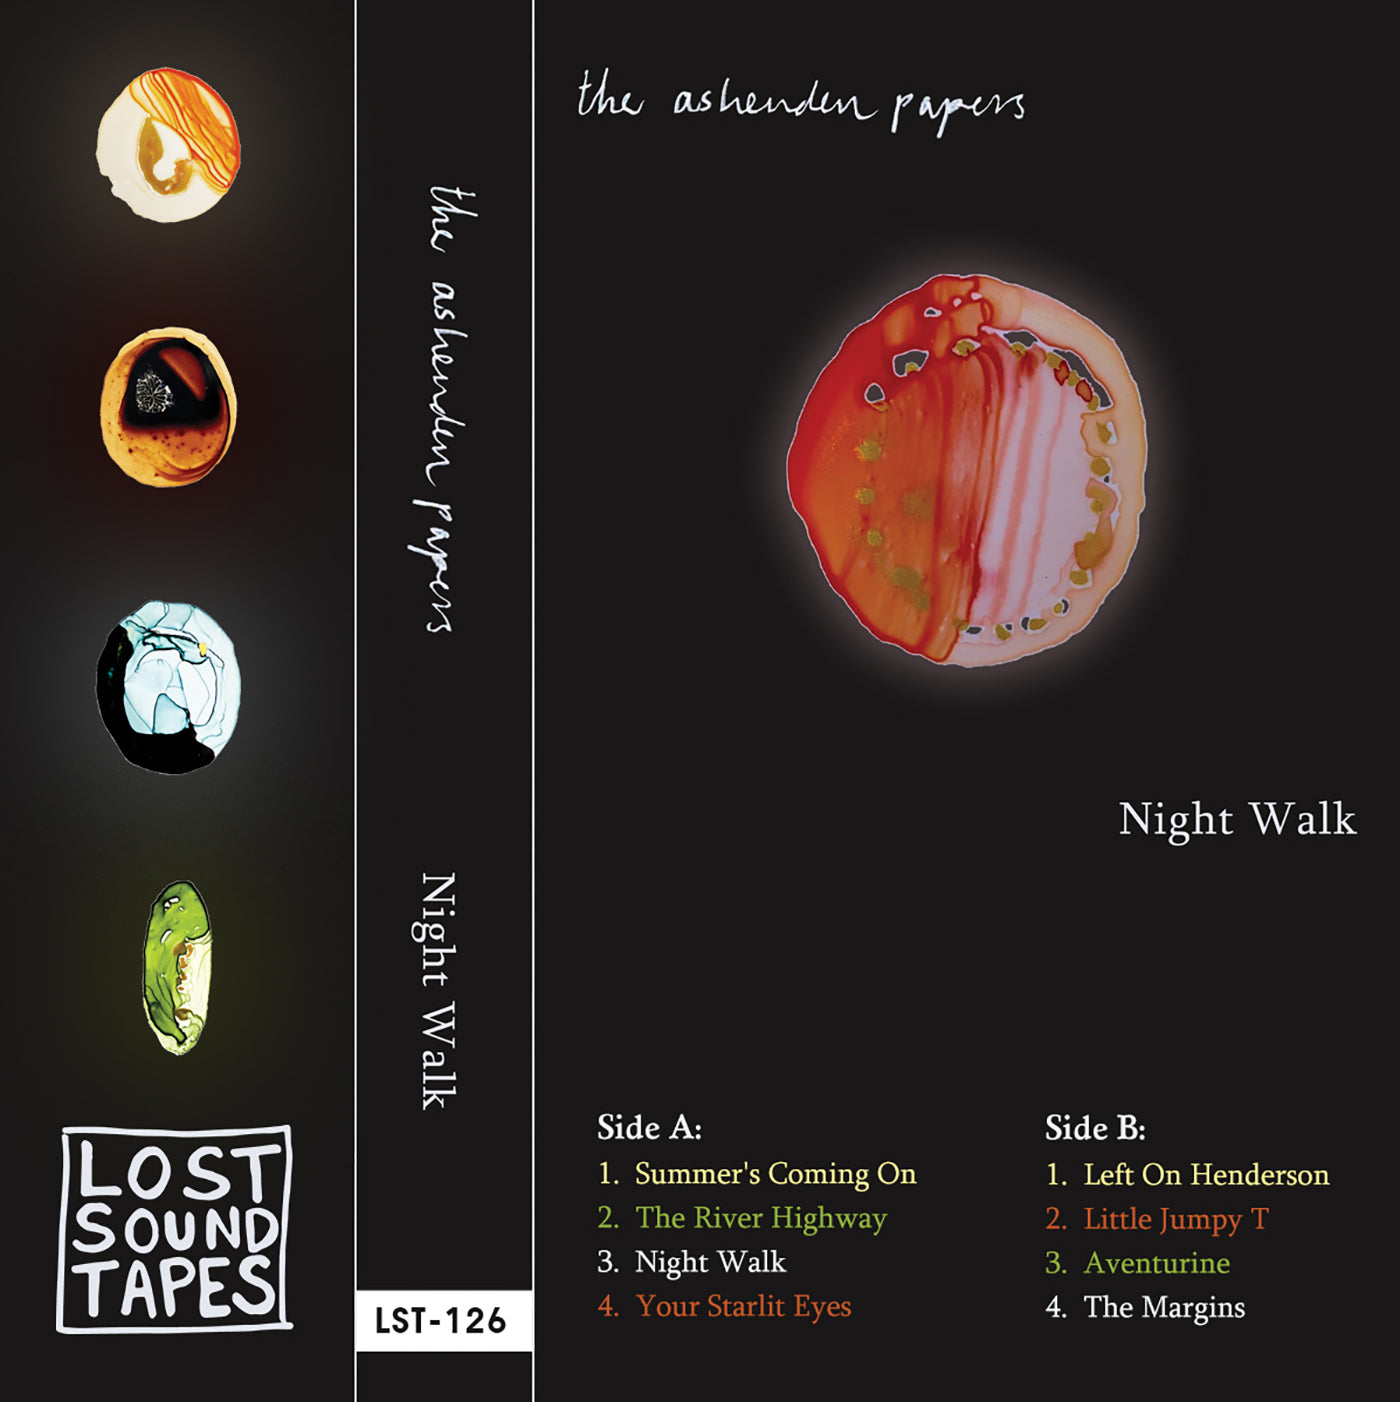 THE ASHENDEN PAPERS "Night Walk" cassette tape